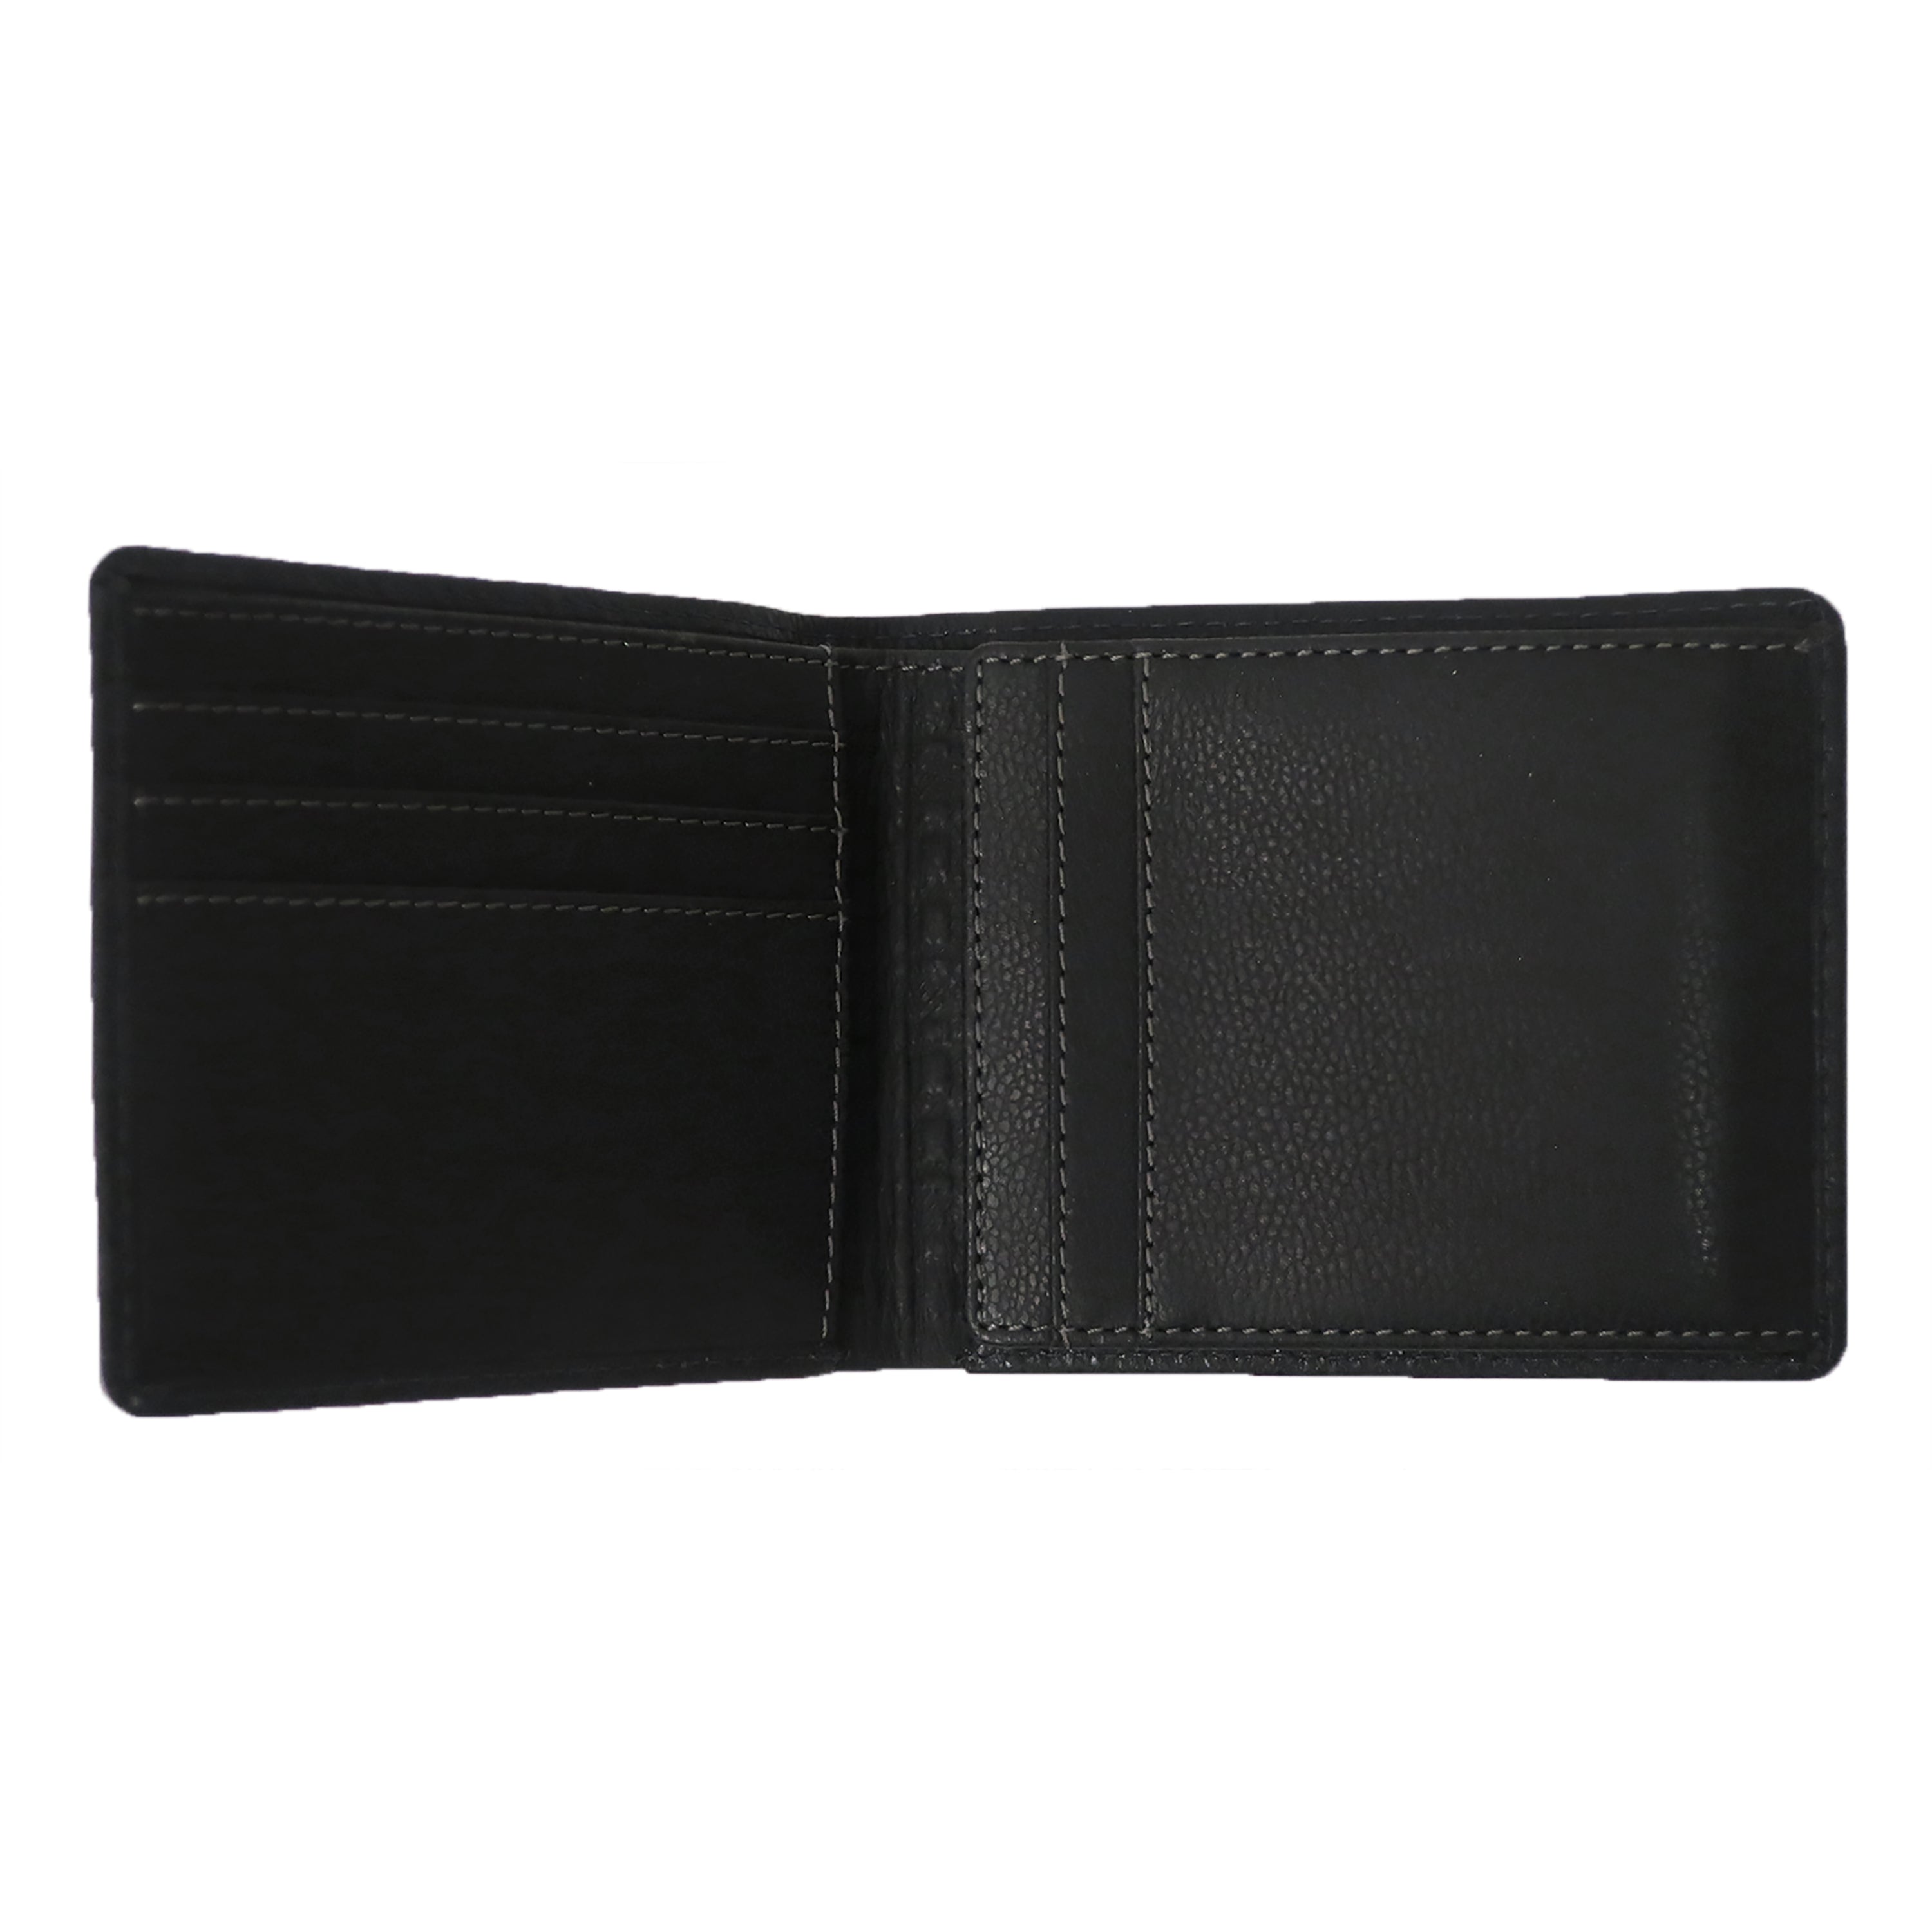 inside view bifold leather wallet, black